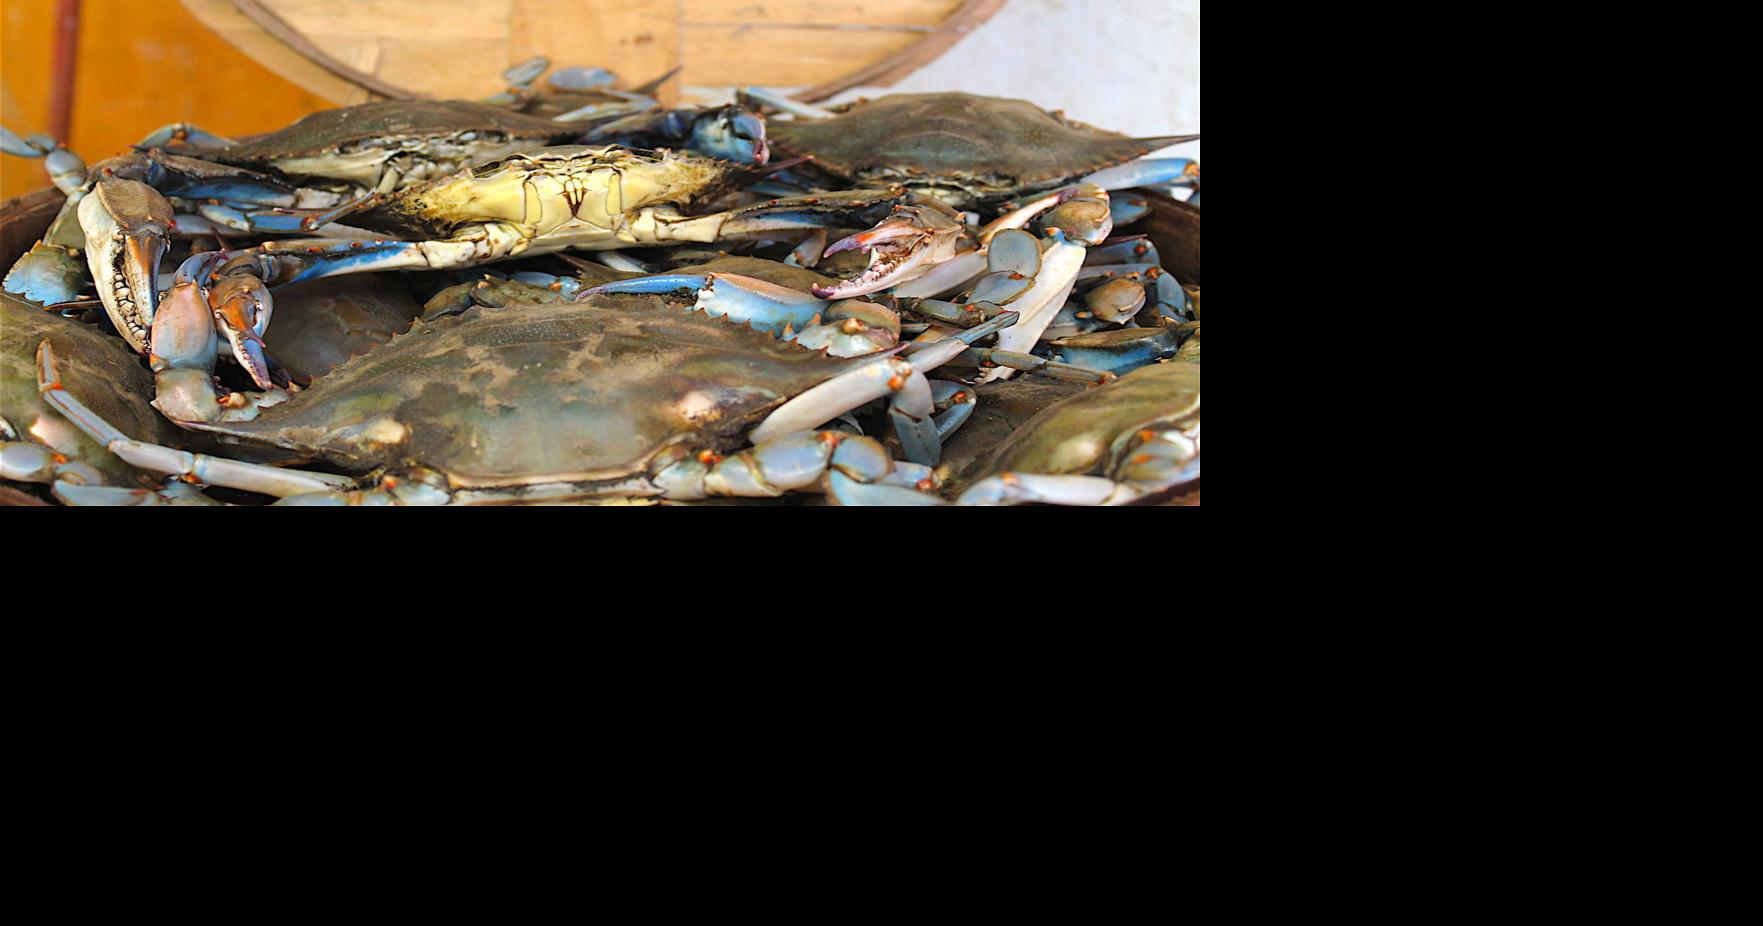 DNR survey shows dip in blue crab population